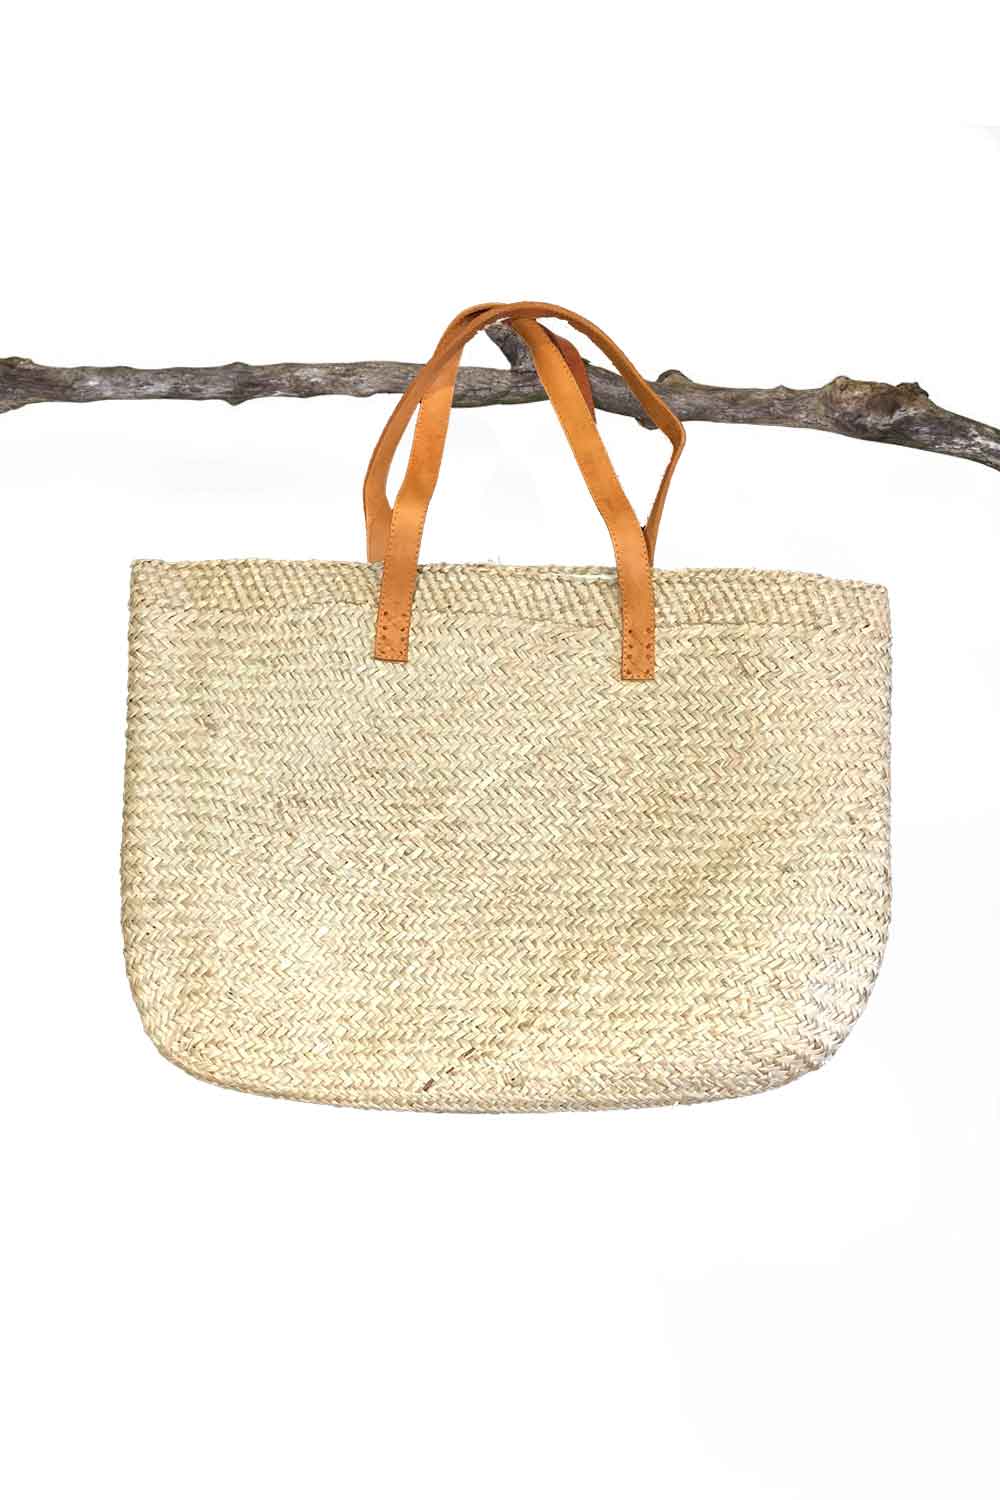 Sanbasics Basket Weave Beach Bag with Leather Strap